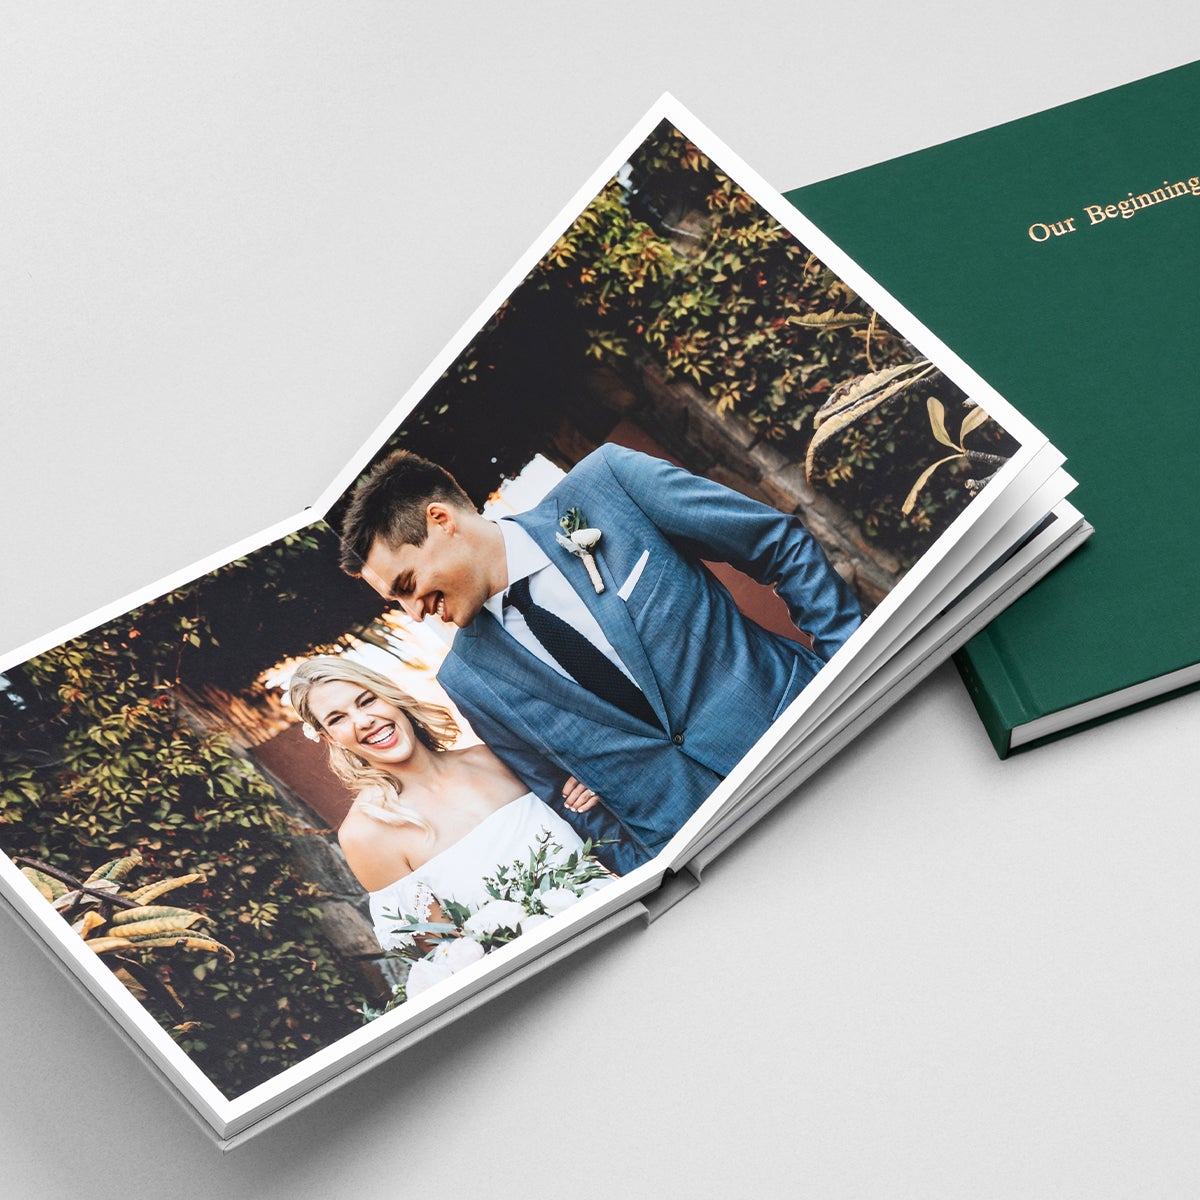 Wedding Layflat Album opened to panoramic spread of newlywed couple on wedding day